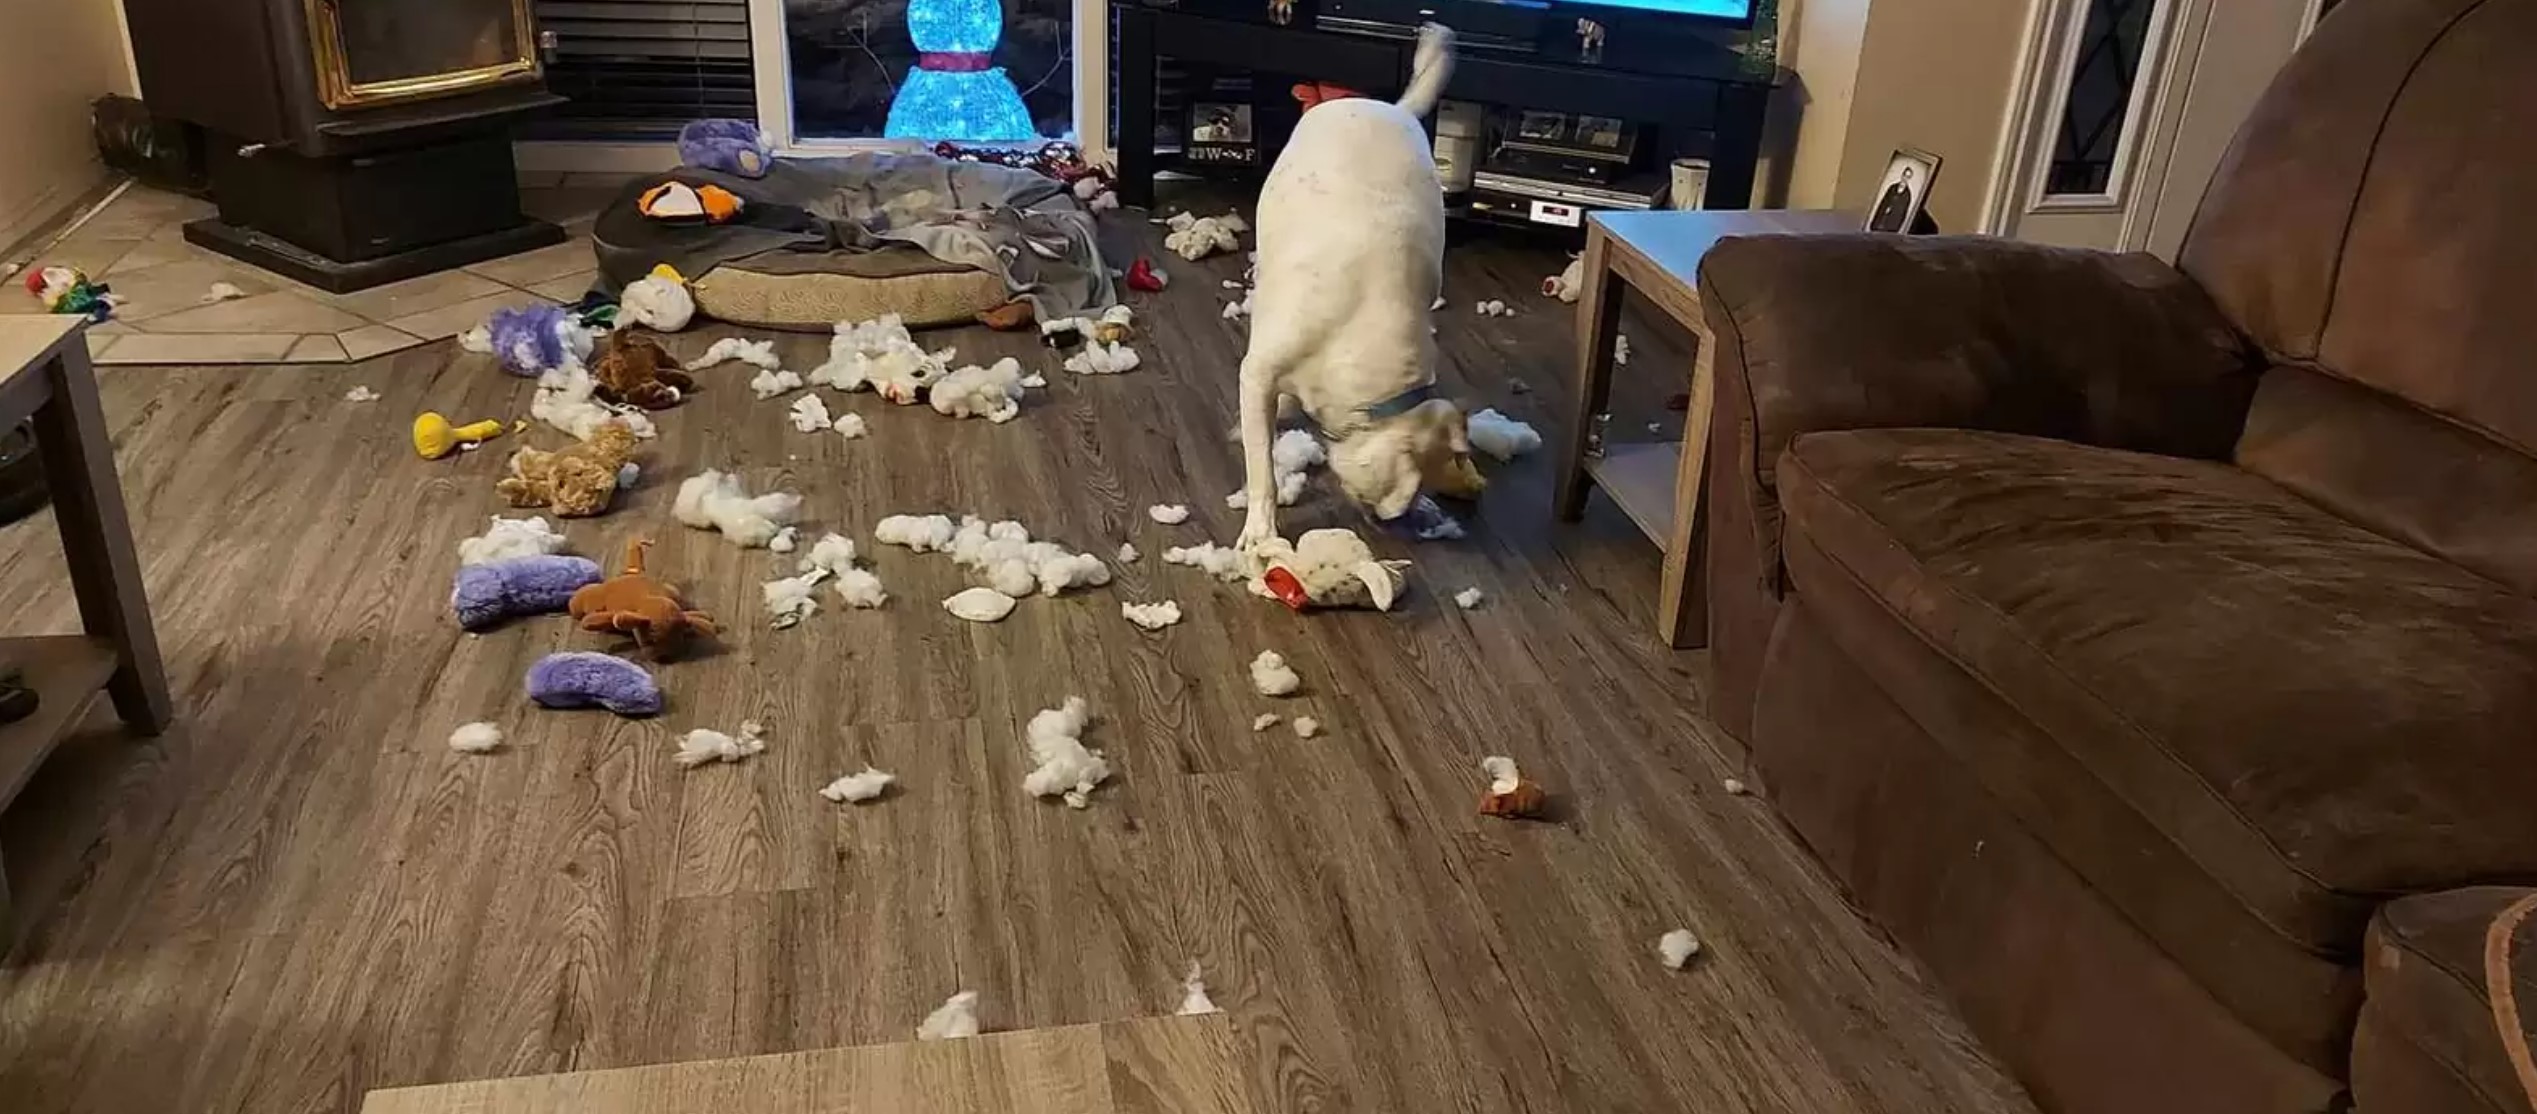 dog making a mess